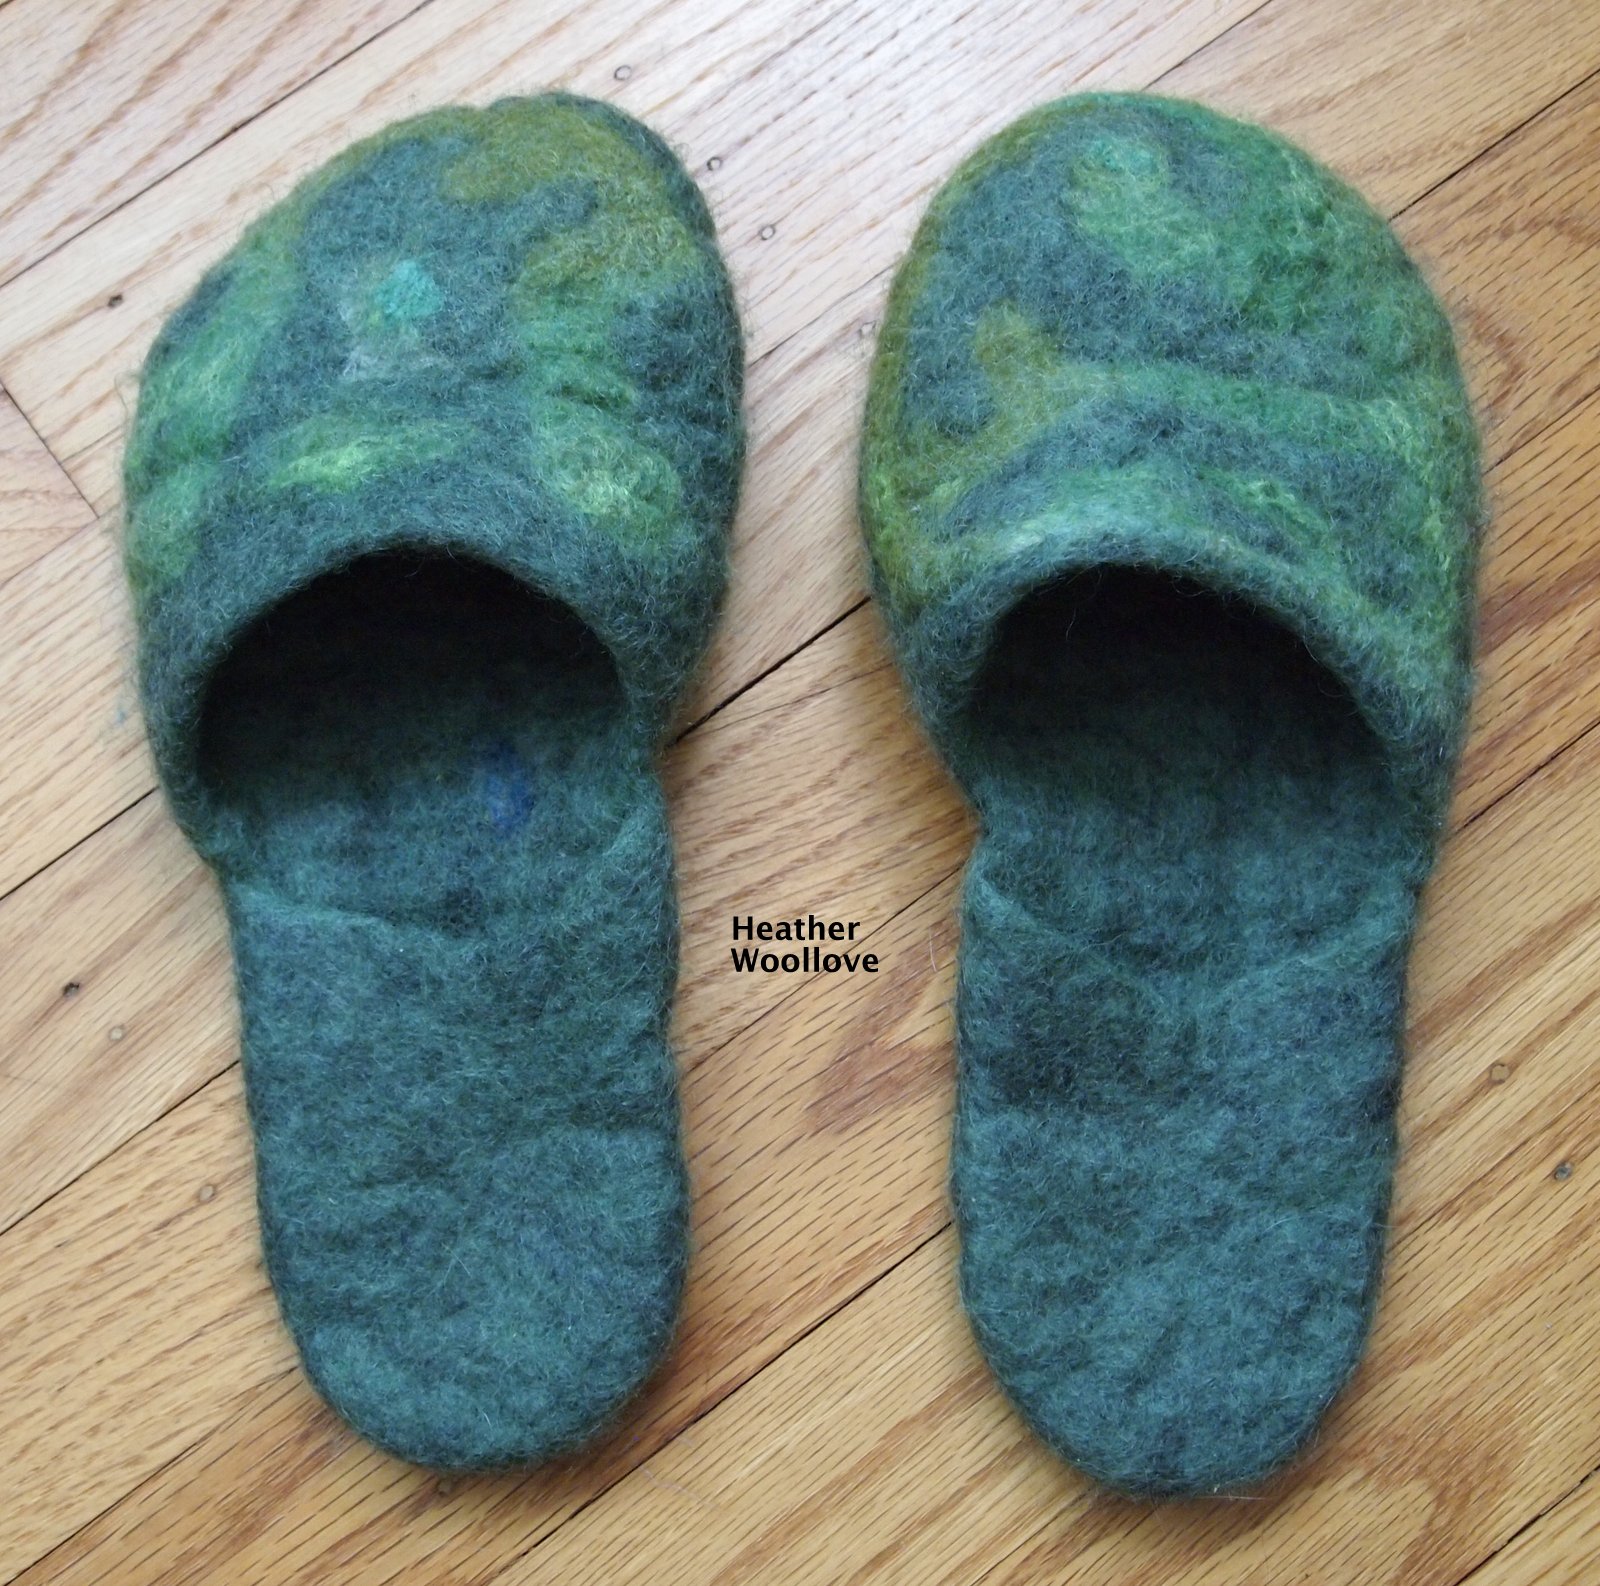 Wool love-functional fiber art: Green Pre-Felt Embellished Slippers